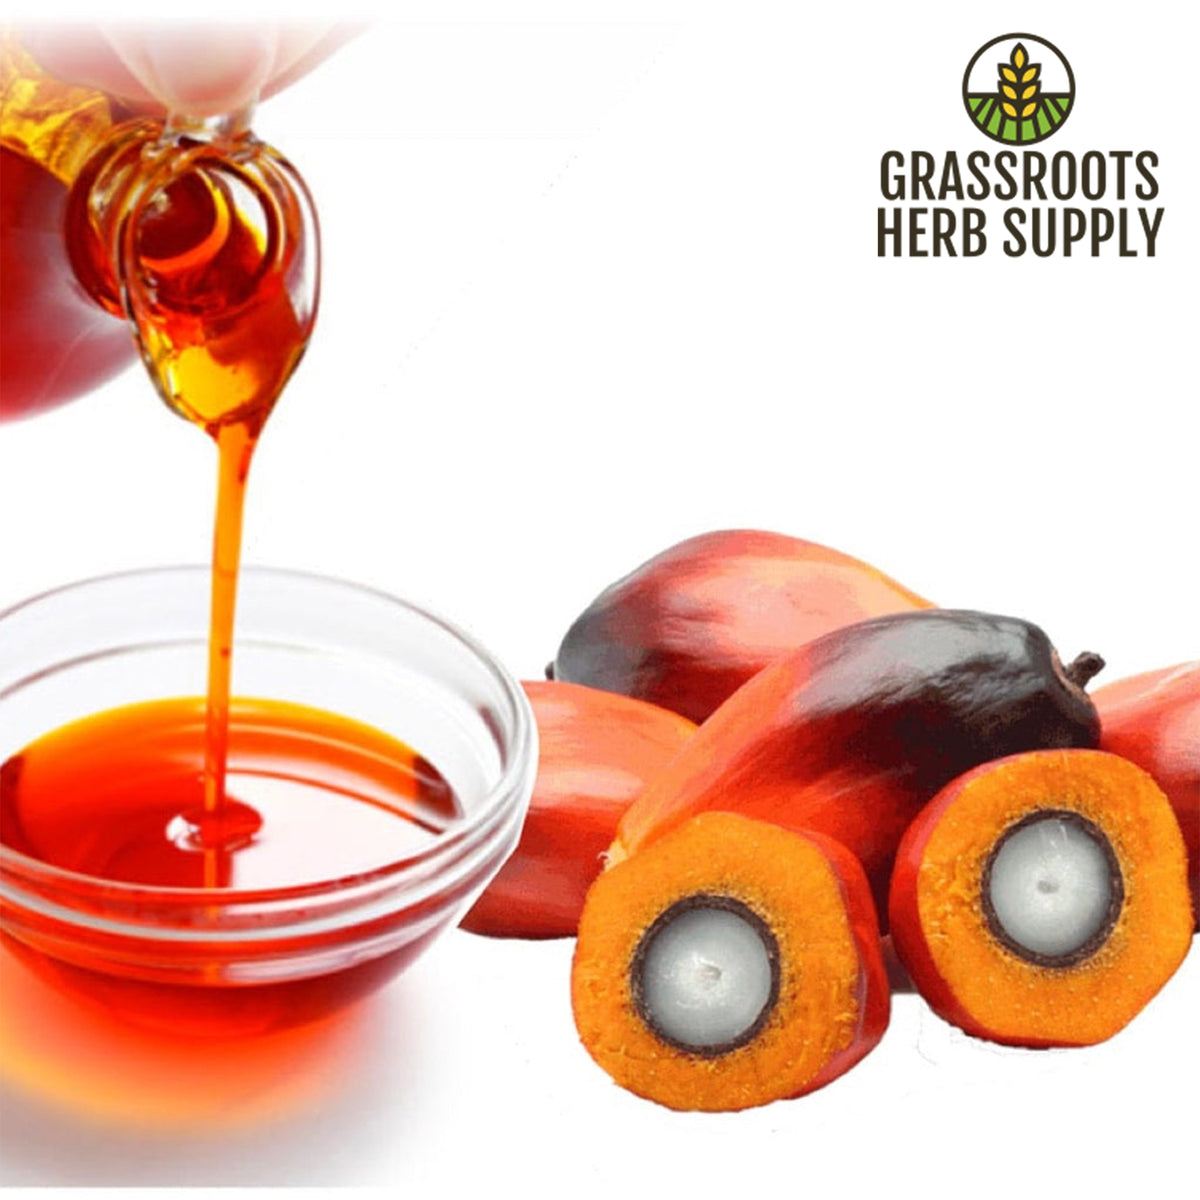 Palm Kernel Oil, Certified Organic - Sample